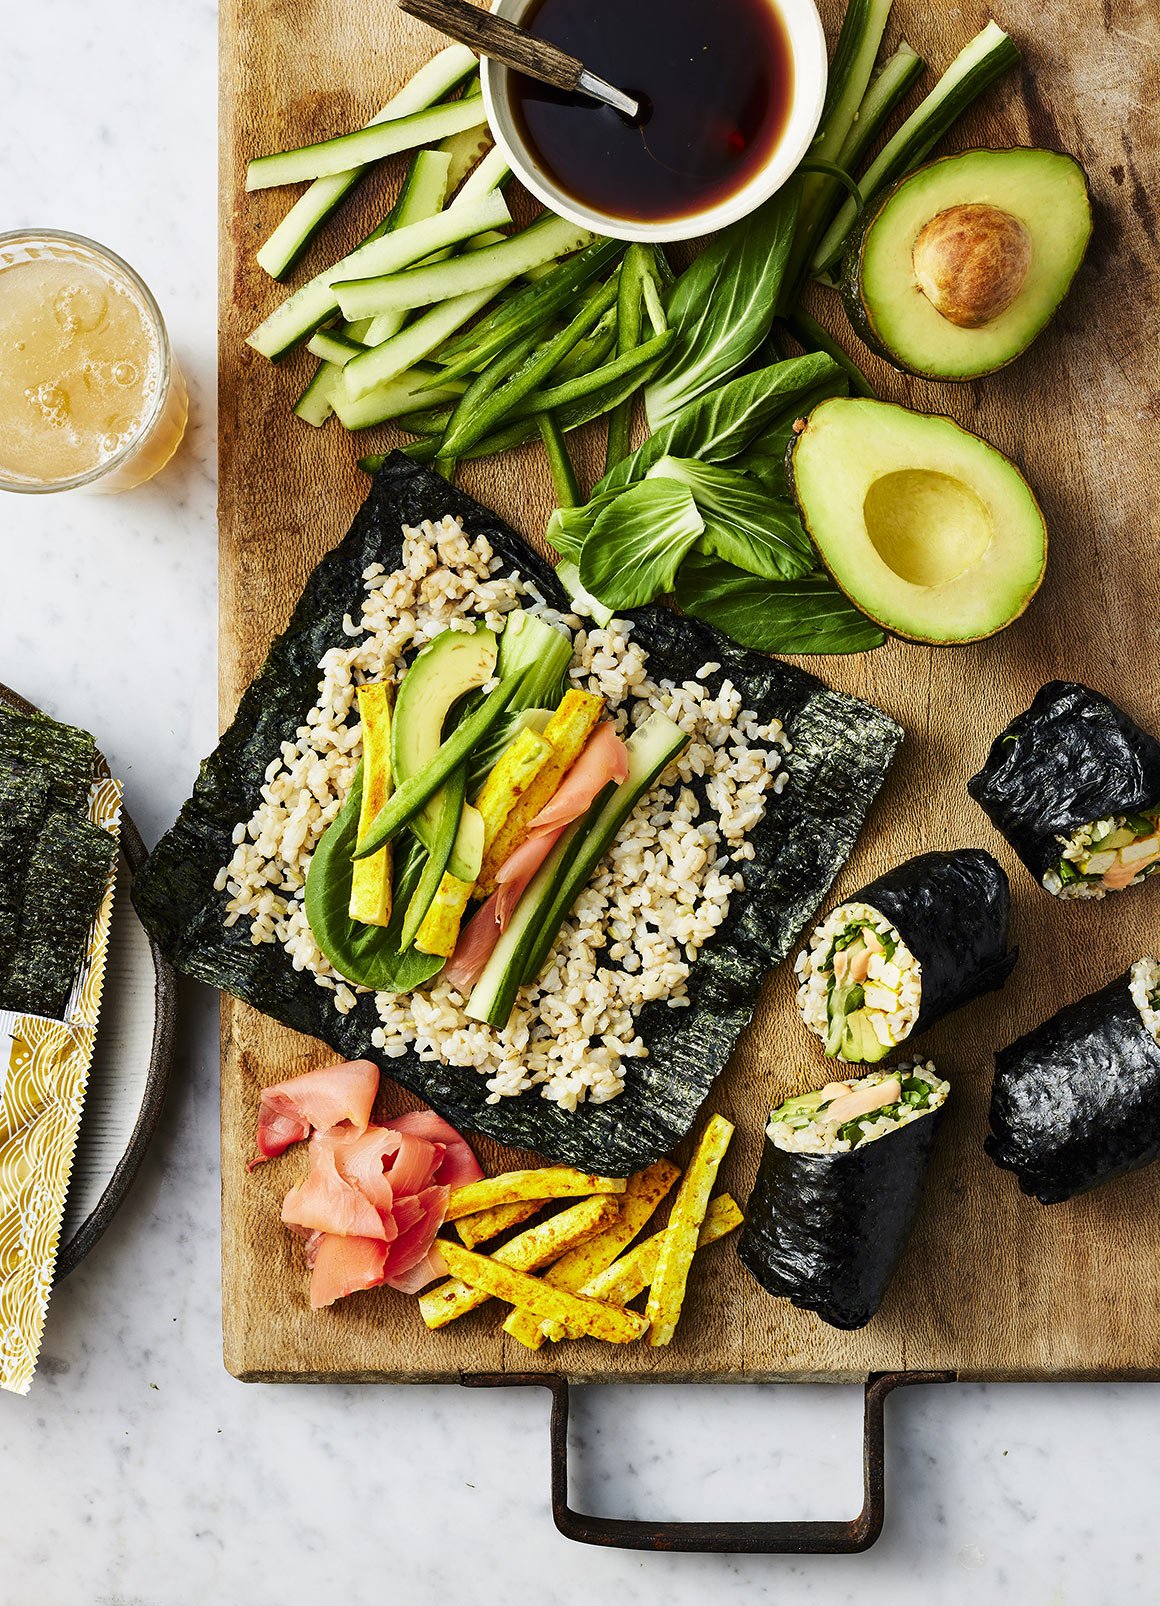 heathful-brown-rice-sushi-Roll-veggies-plant-based-seaweed-wrap-lunch-quick-recipe.jpg